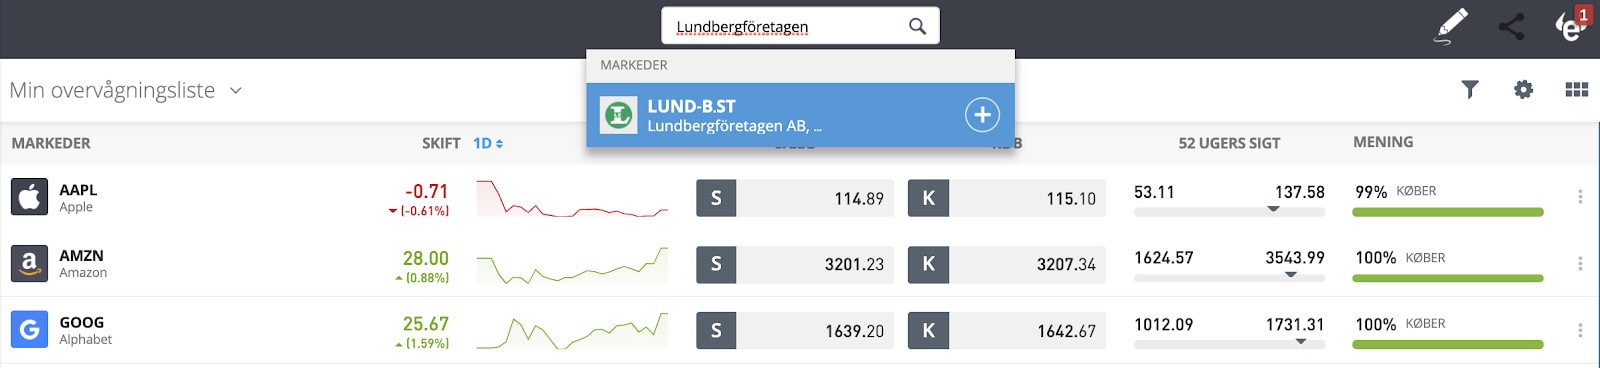 Lundbergfo%CC%88retagen